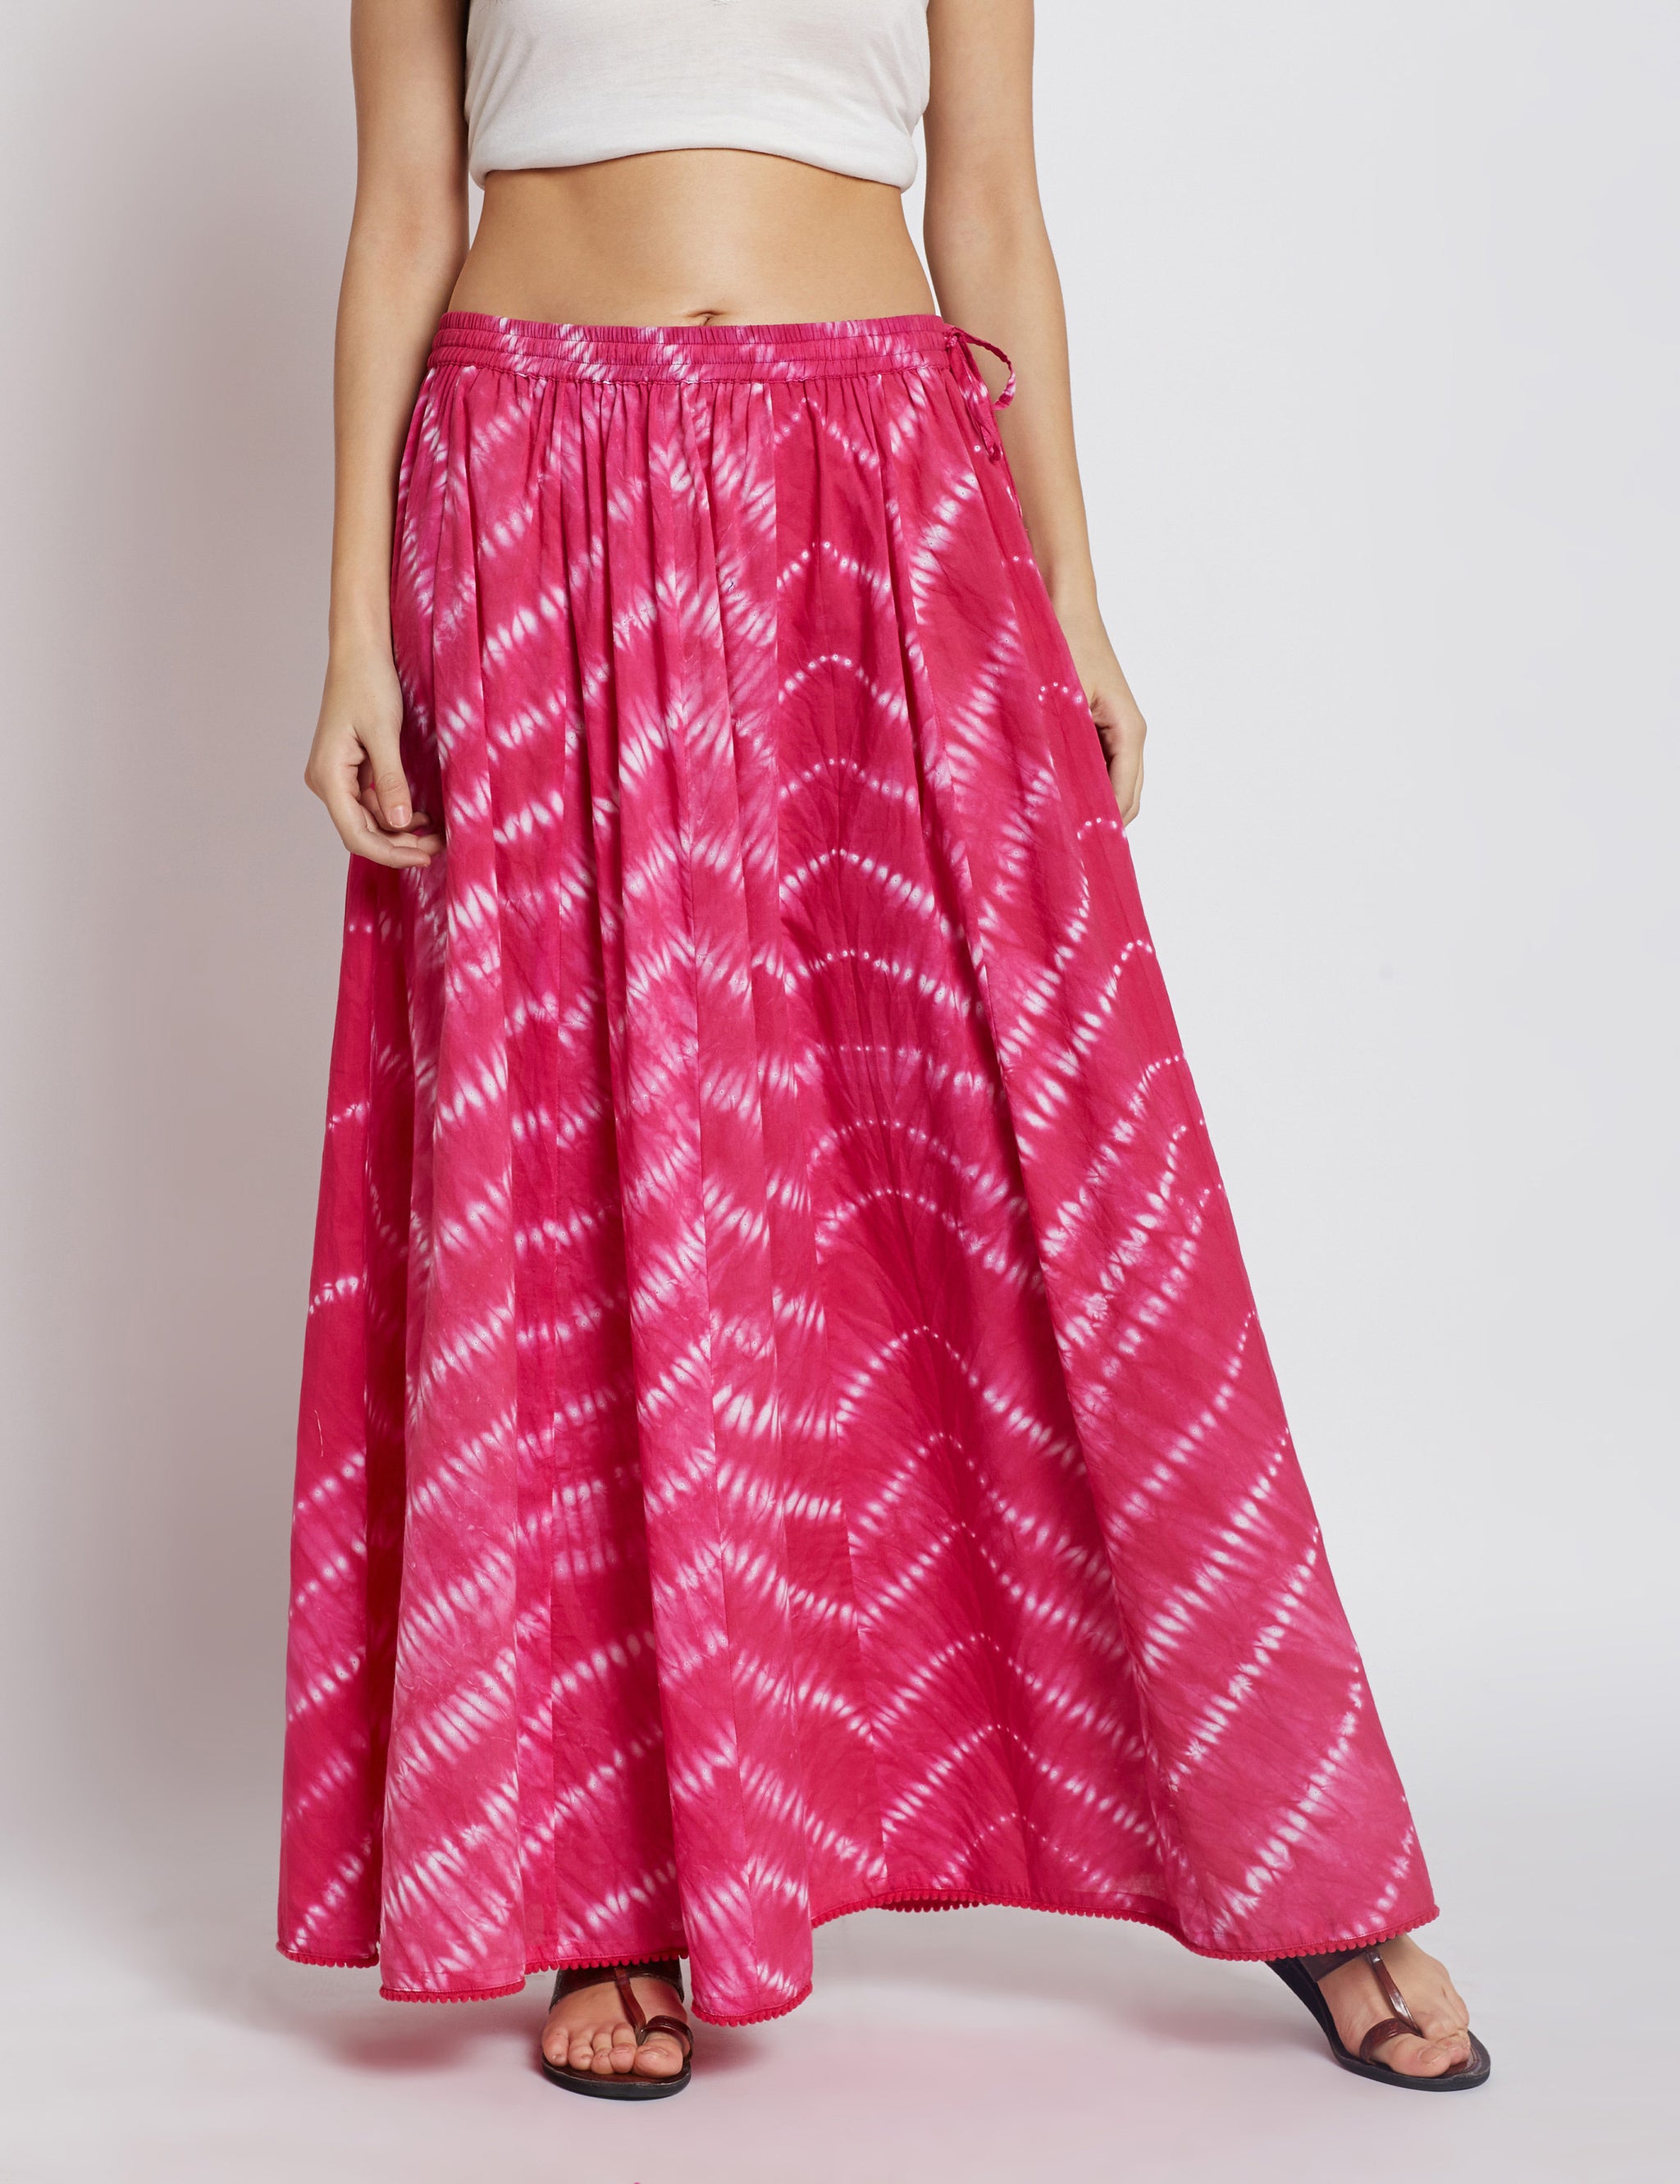 Shibori panelled long skirt in hotpink colour